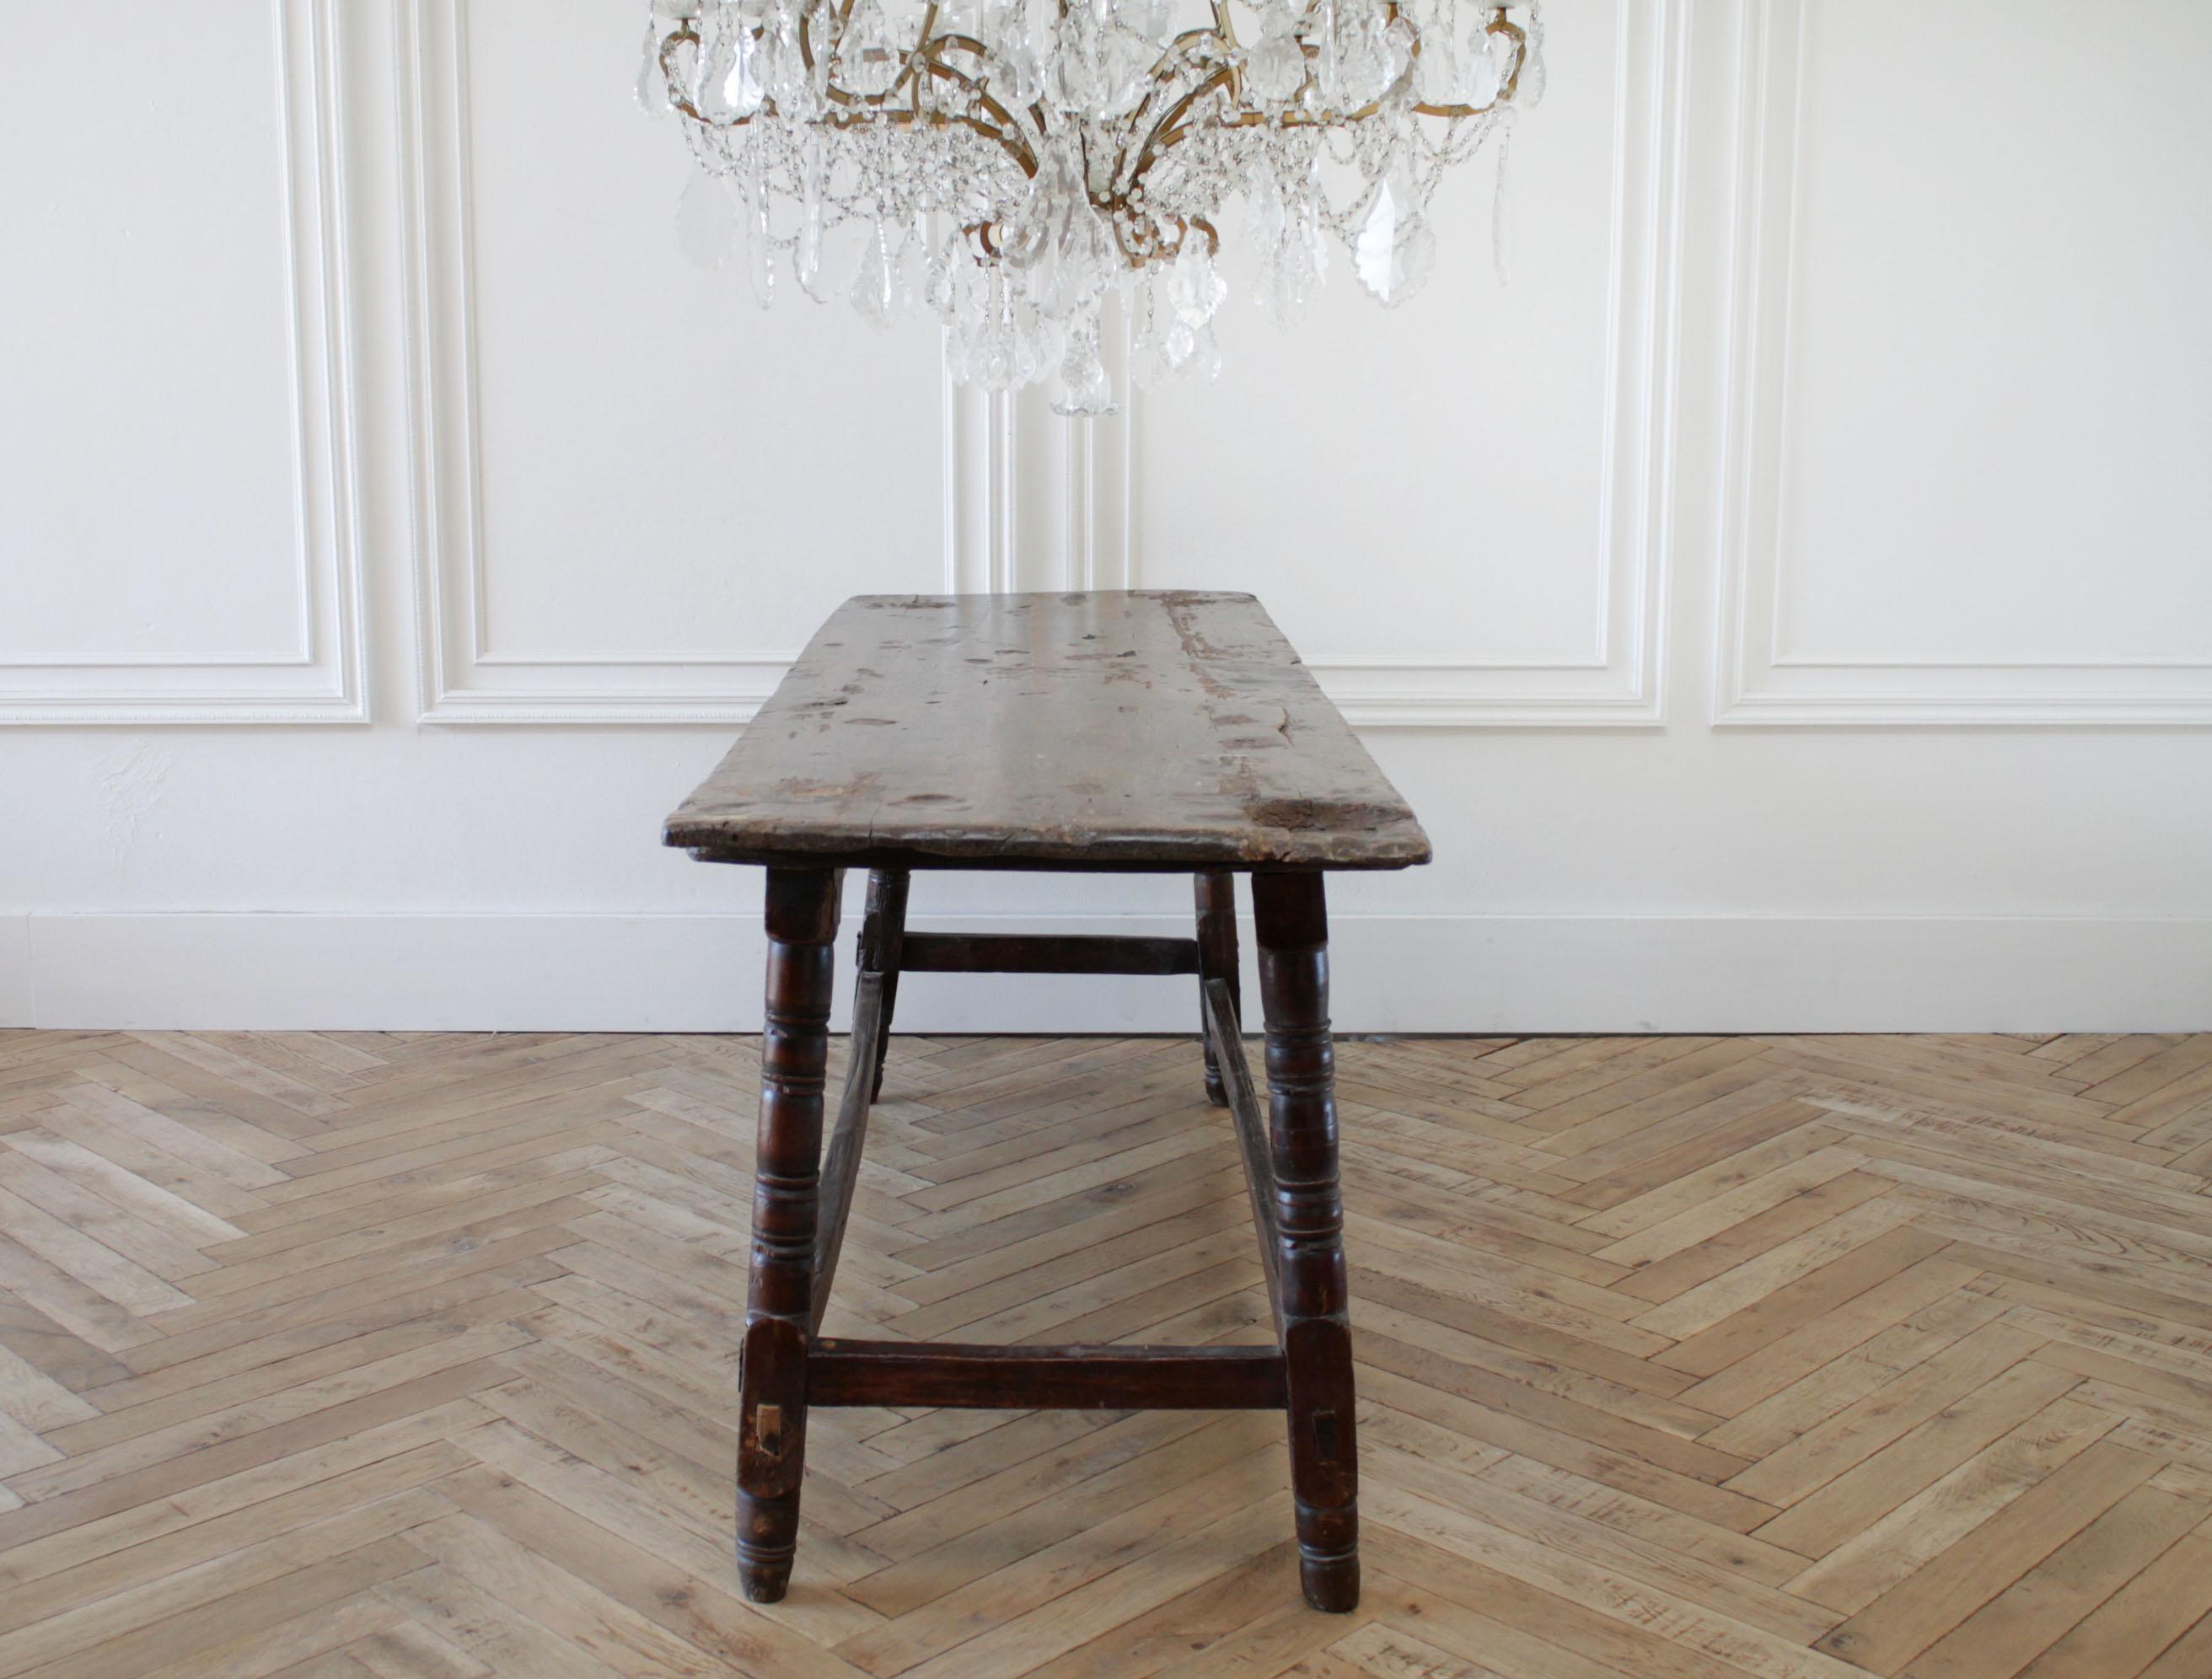 19th century rustic European dark wood table
Measures: 24